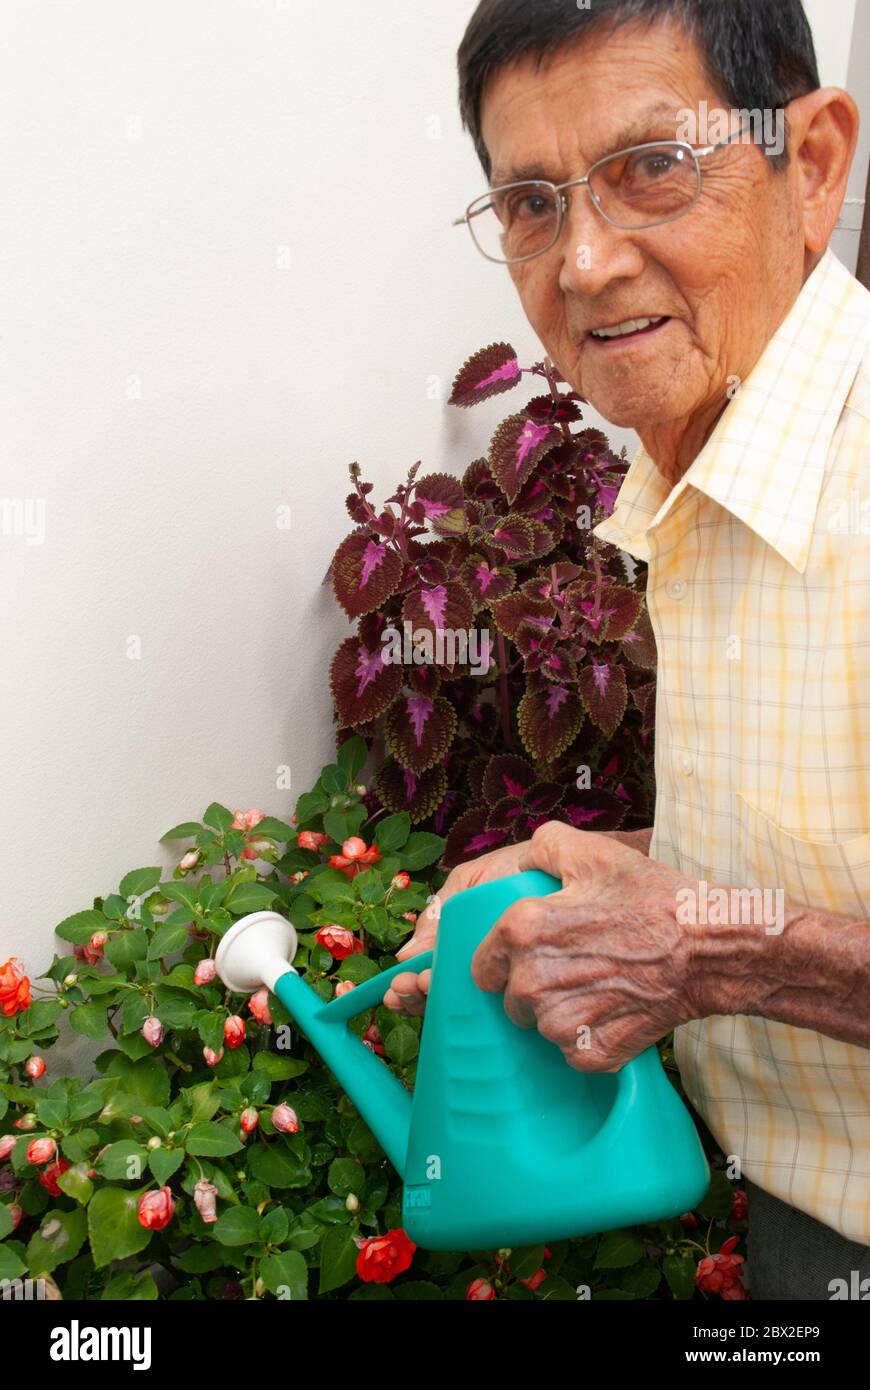 Senior citizen taking care of his garden. Stock Photo